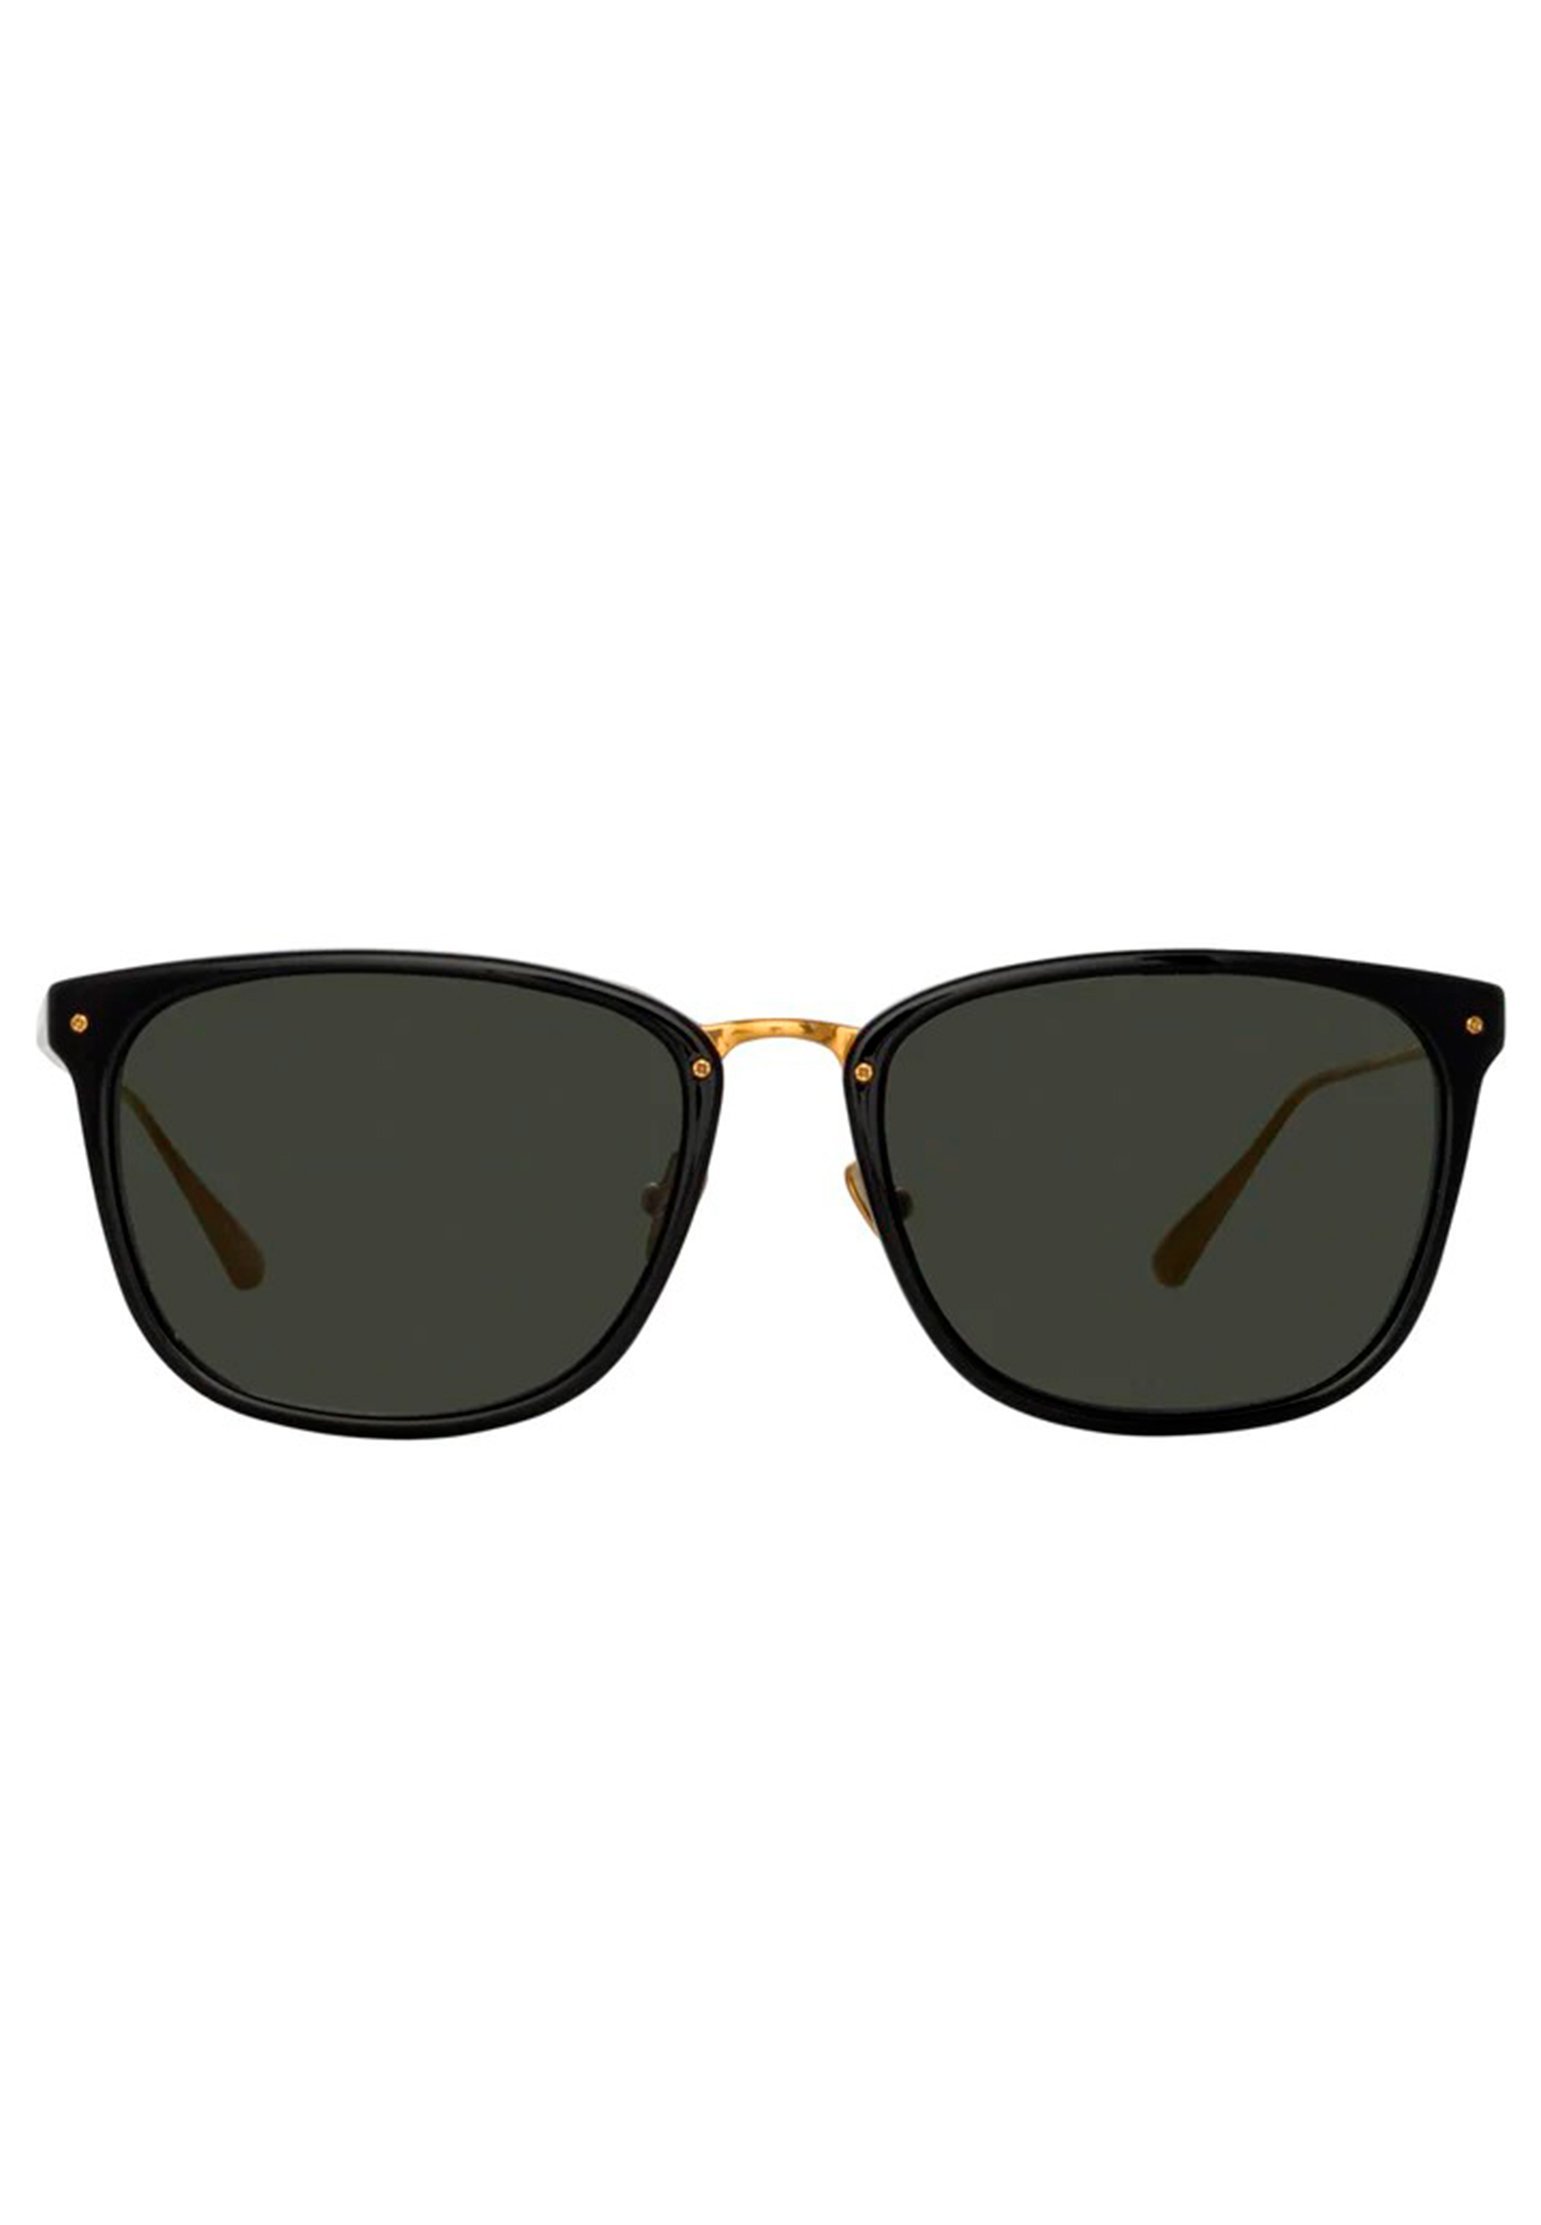 Sunglasses LINDA FARROW Color: black (Code: 4018) in online store Allure